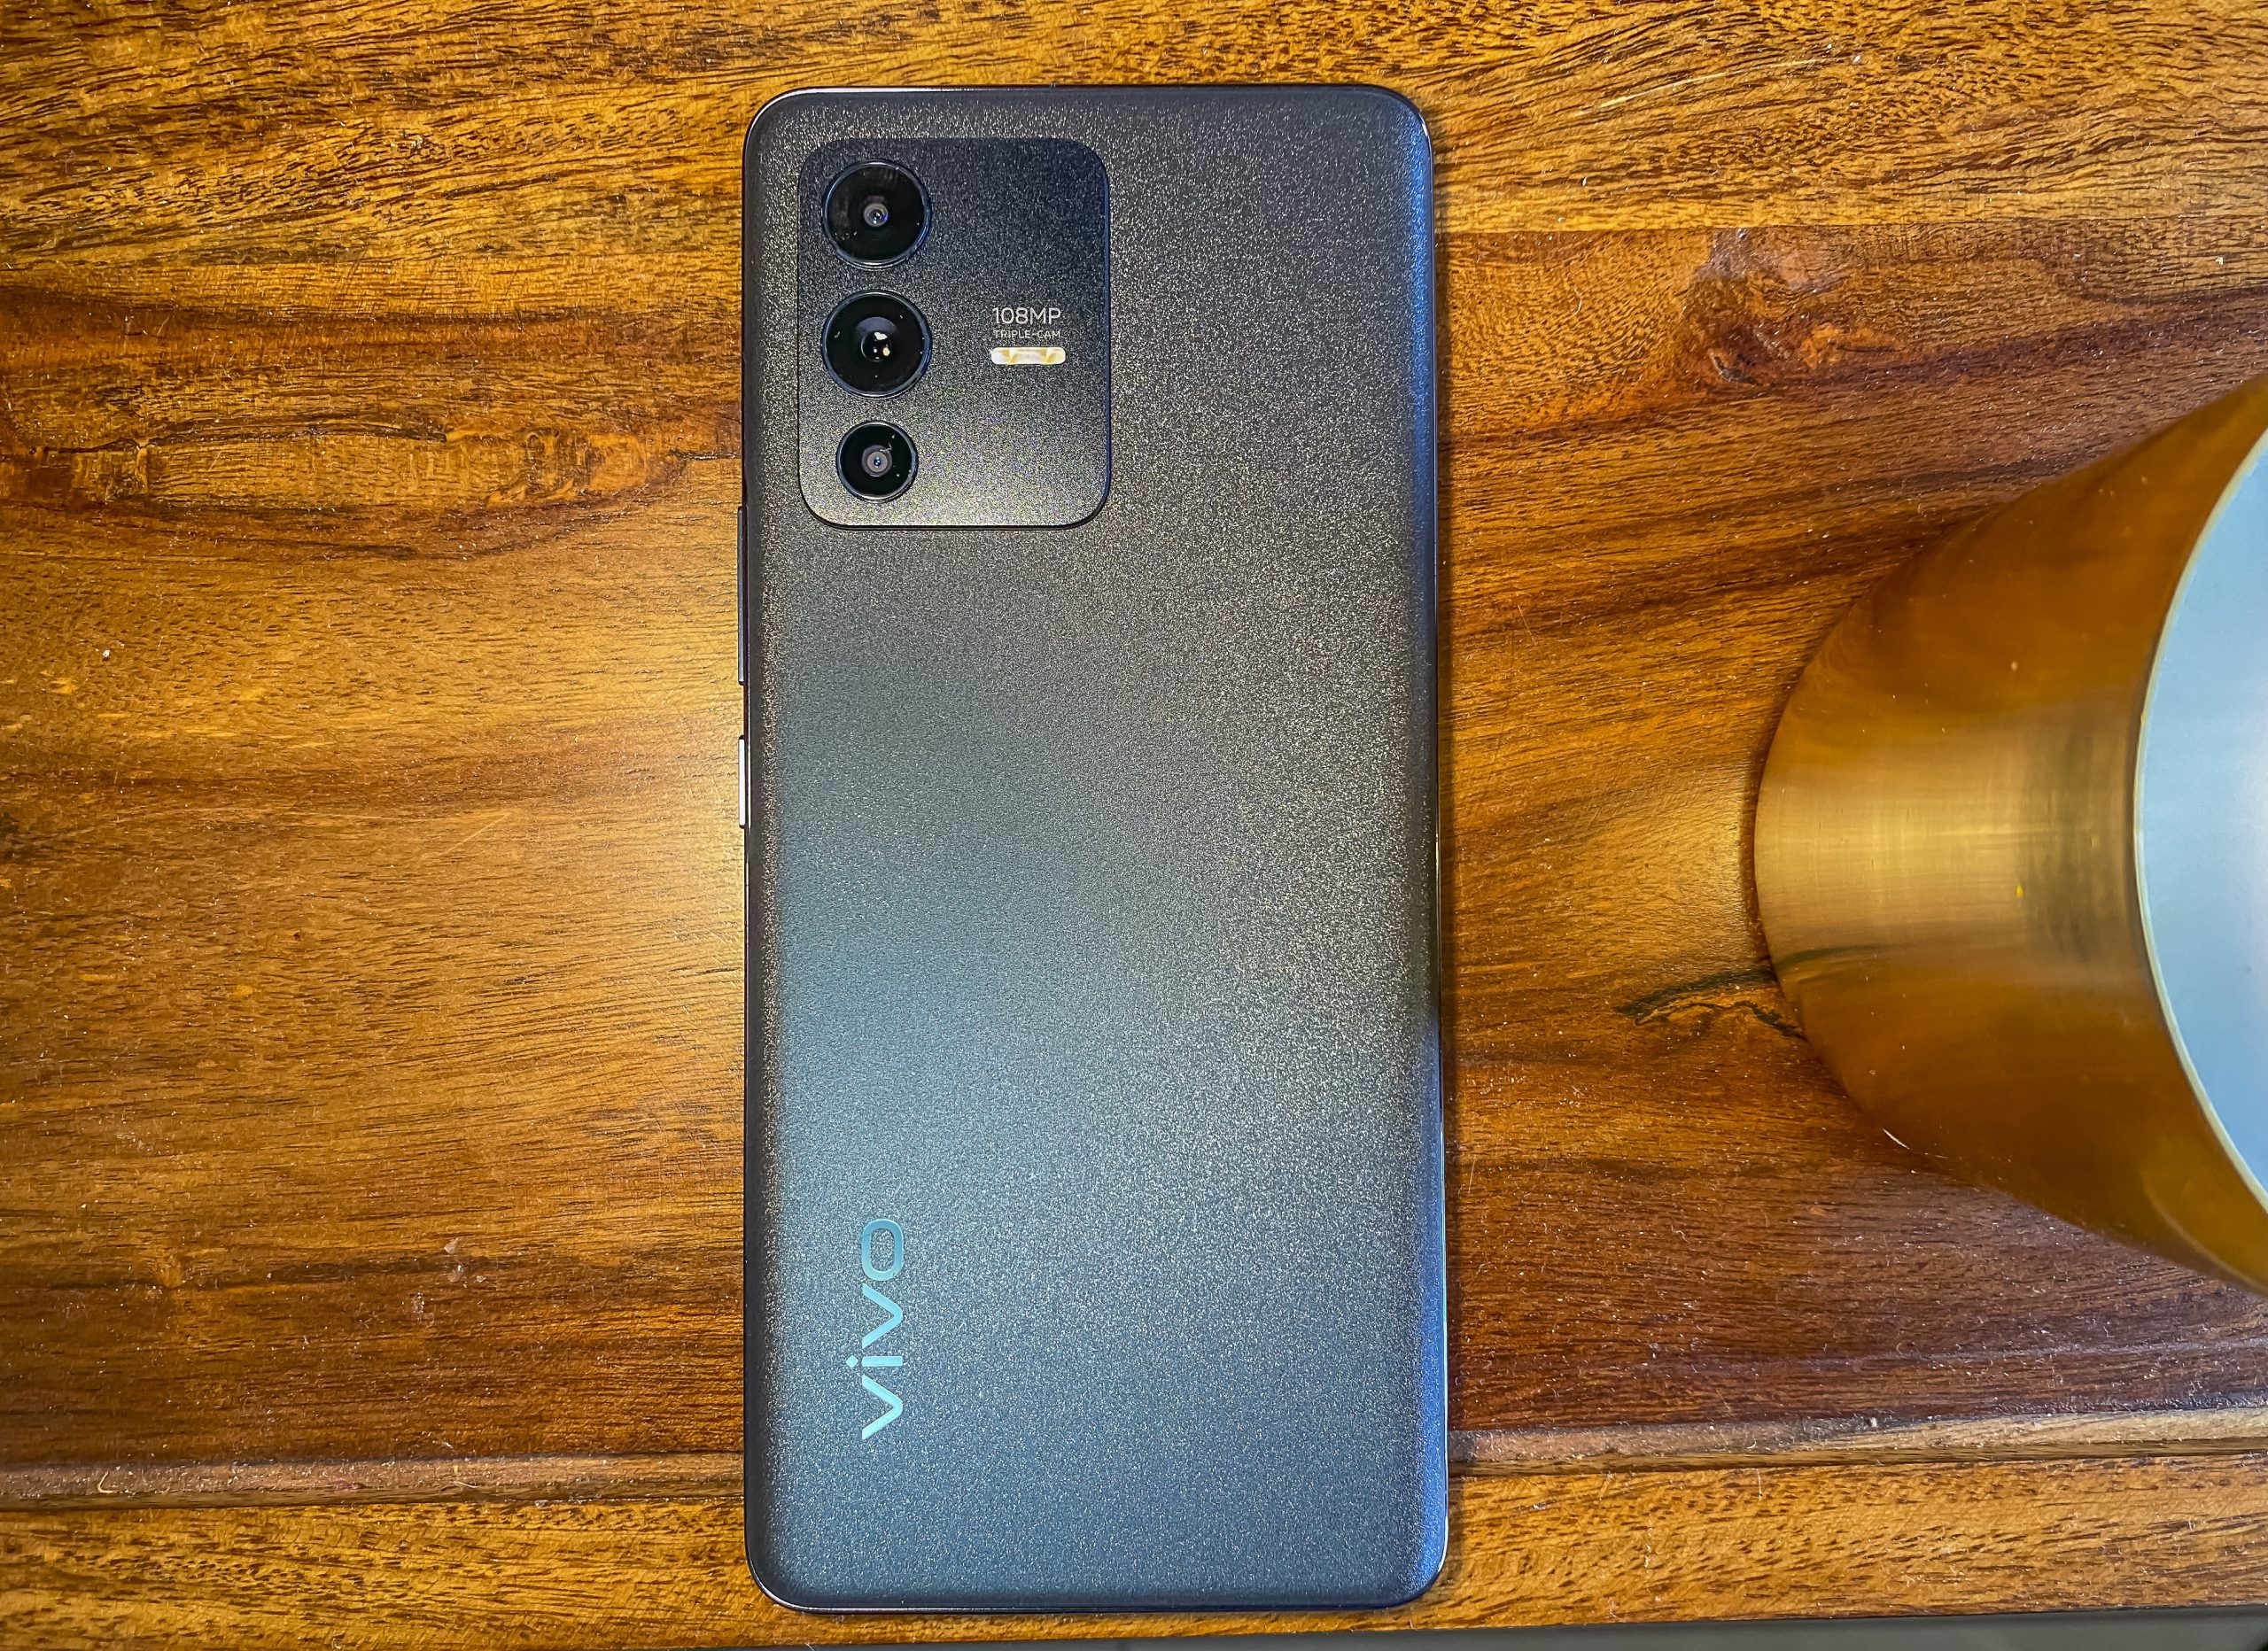 Vivo V23 5G Camera test Full Features 